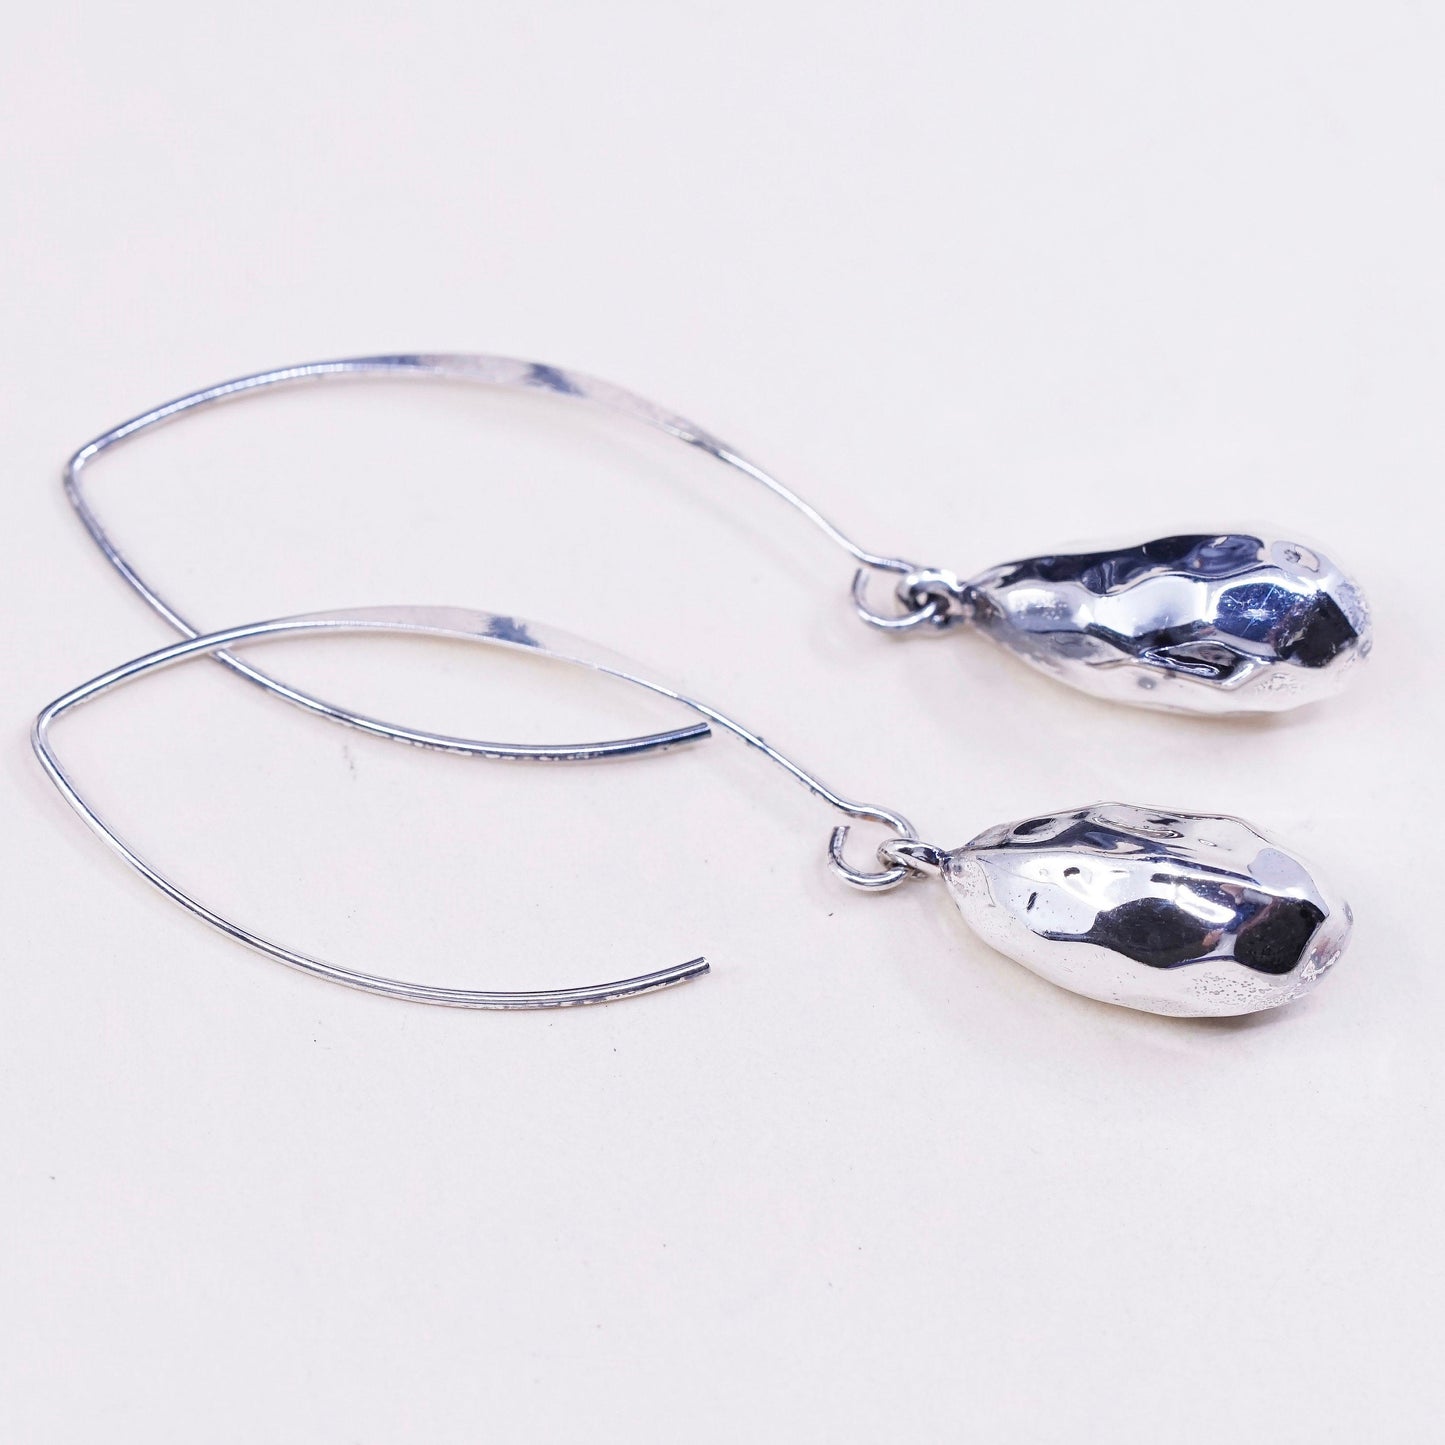 vtg CFJ Sterling silver handmade earrings, hammered 925 teardrop dangles